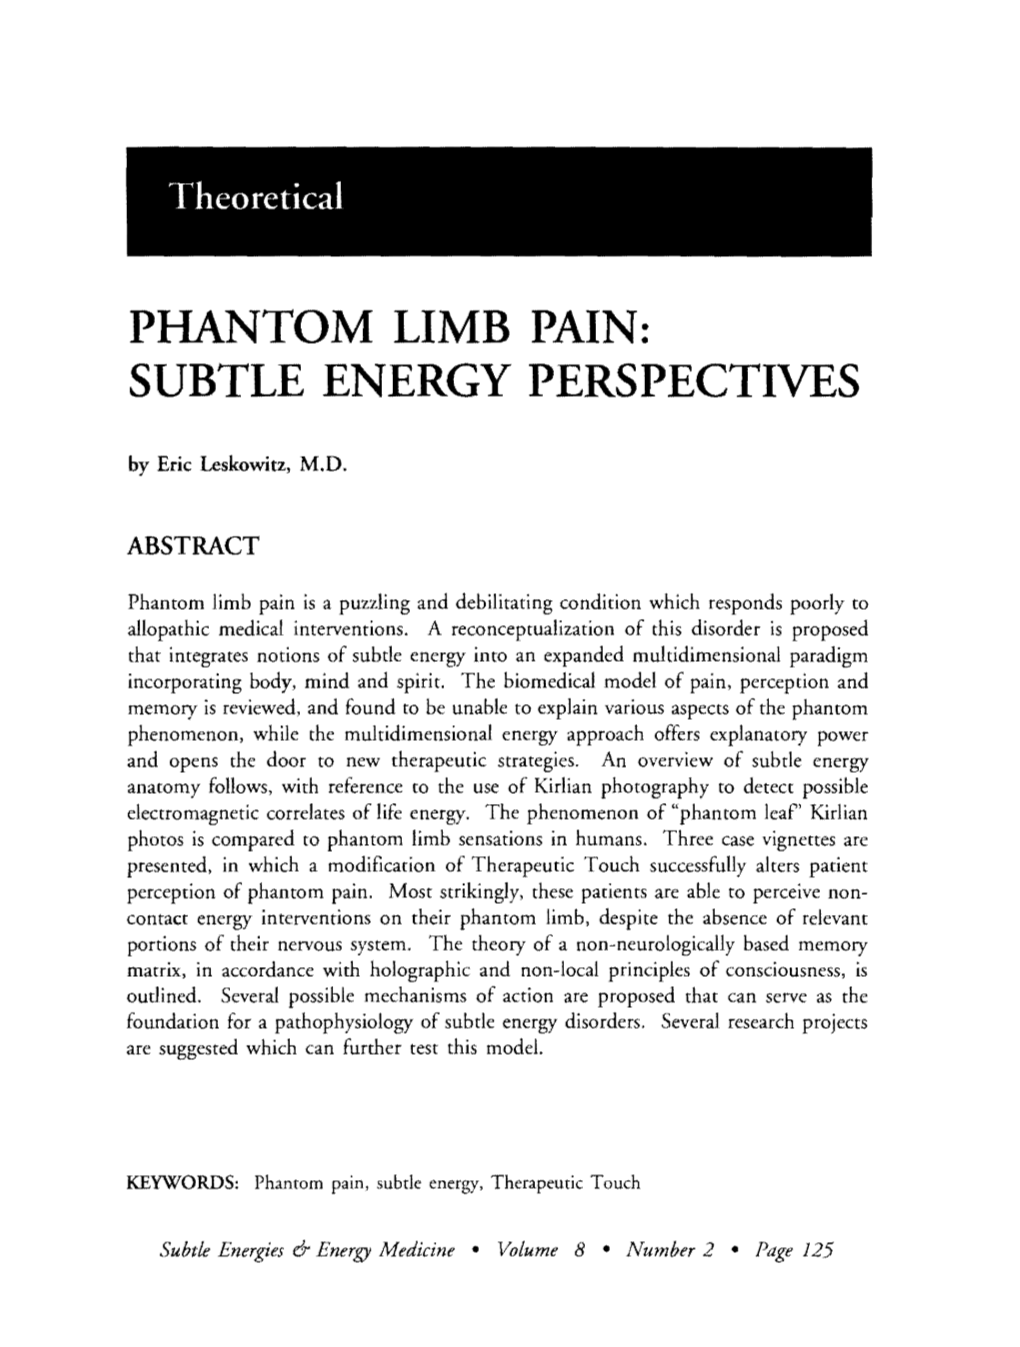 PHANTOM LIMB PAIN: SUBTLE ENERGY PERSPECTIVES by Eric Leskowitz, M.D